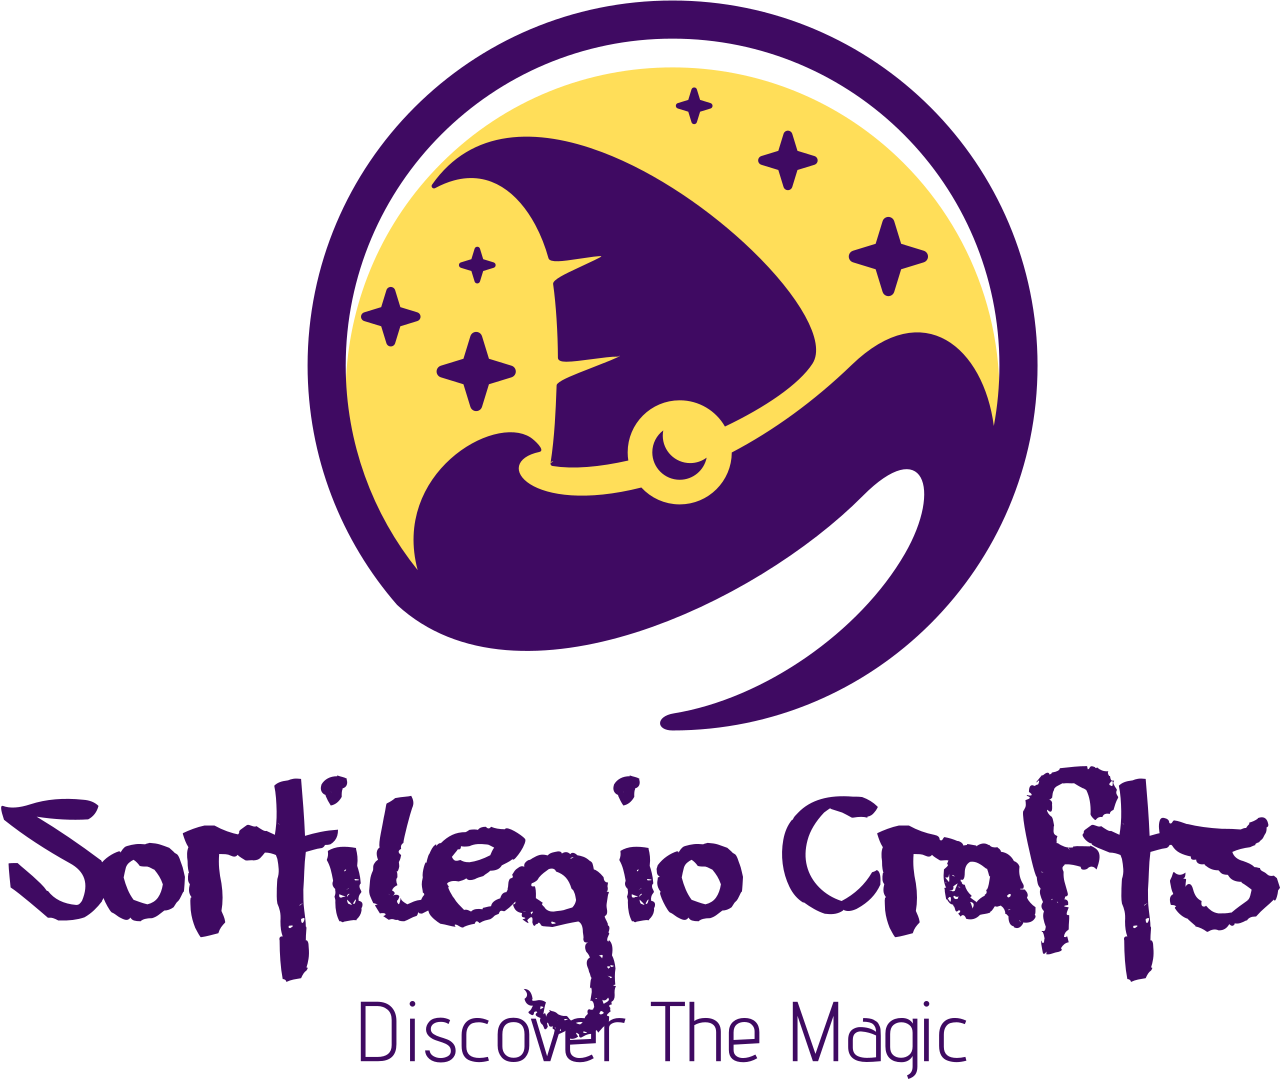 Sortilegio Crafts 's logo